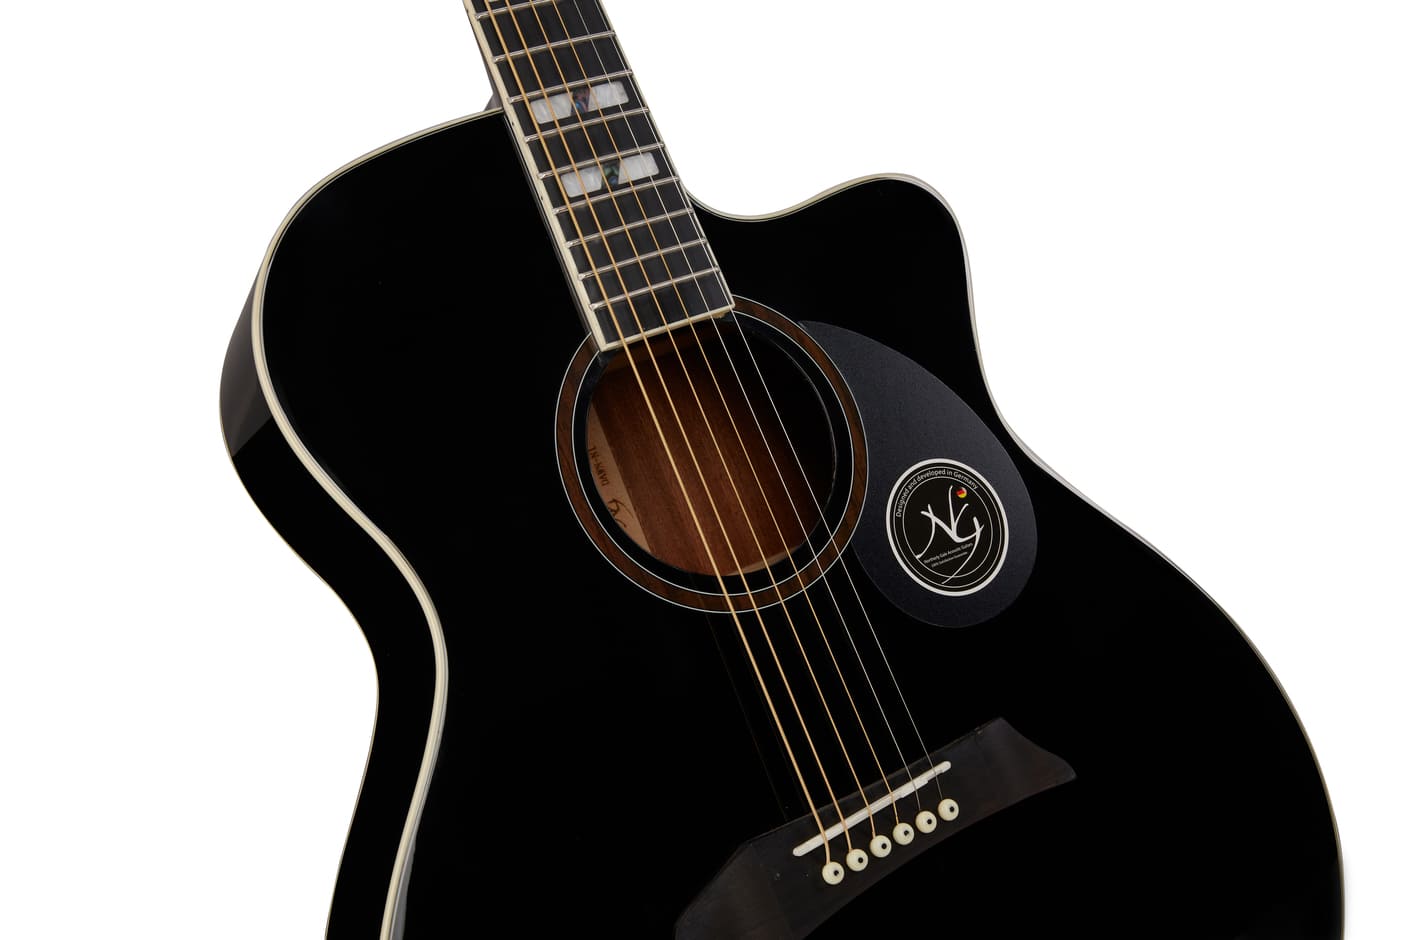 NG DAWN N1 BK акустическая гитара, цвет черный